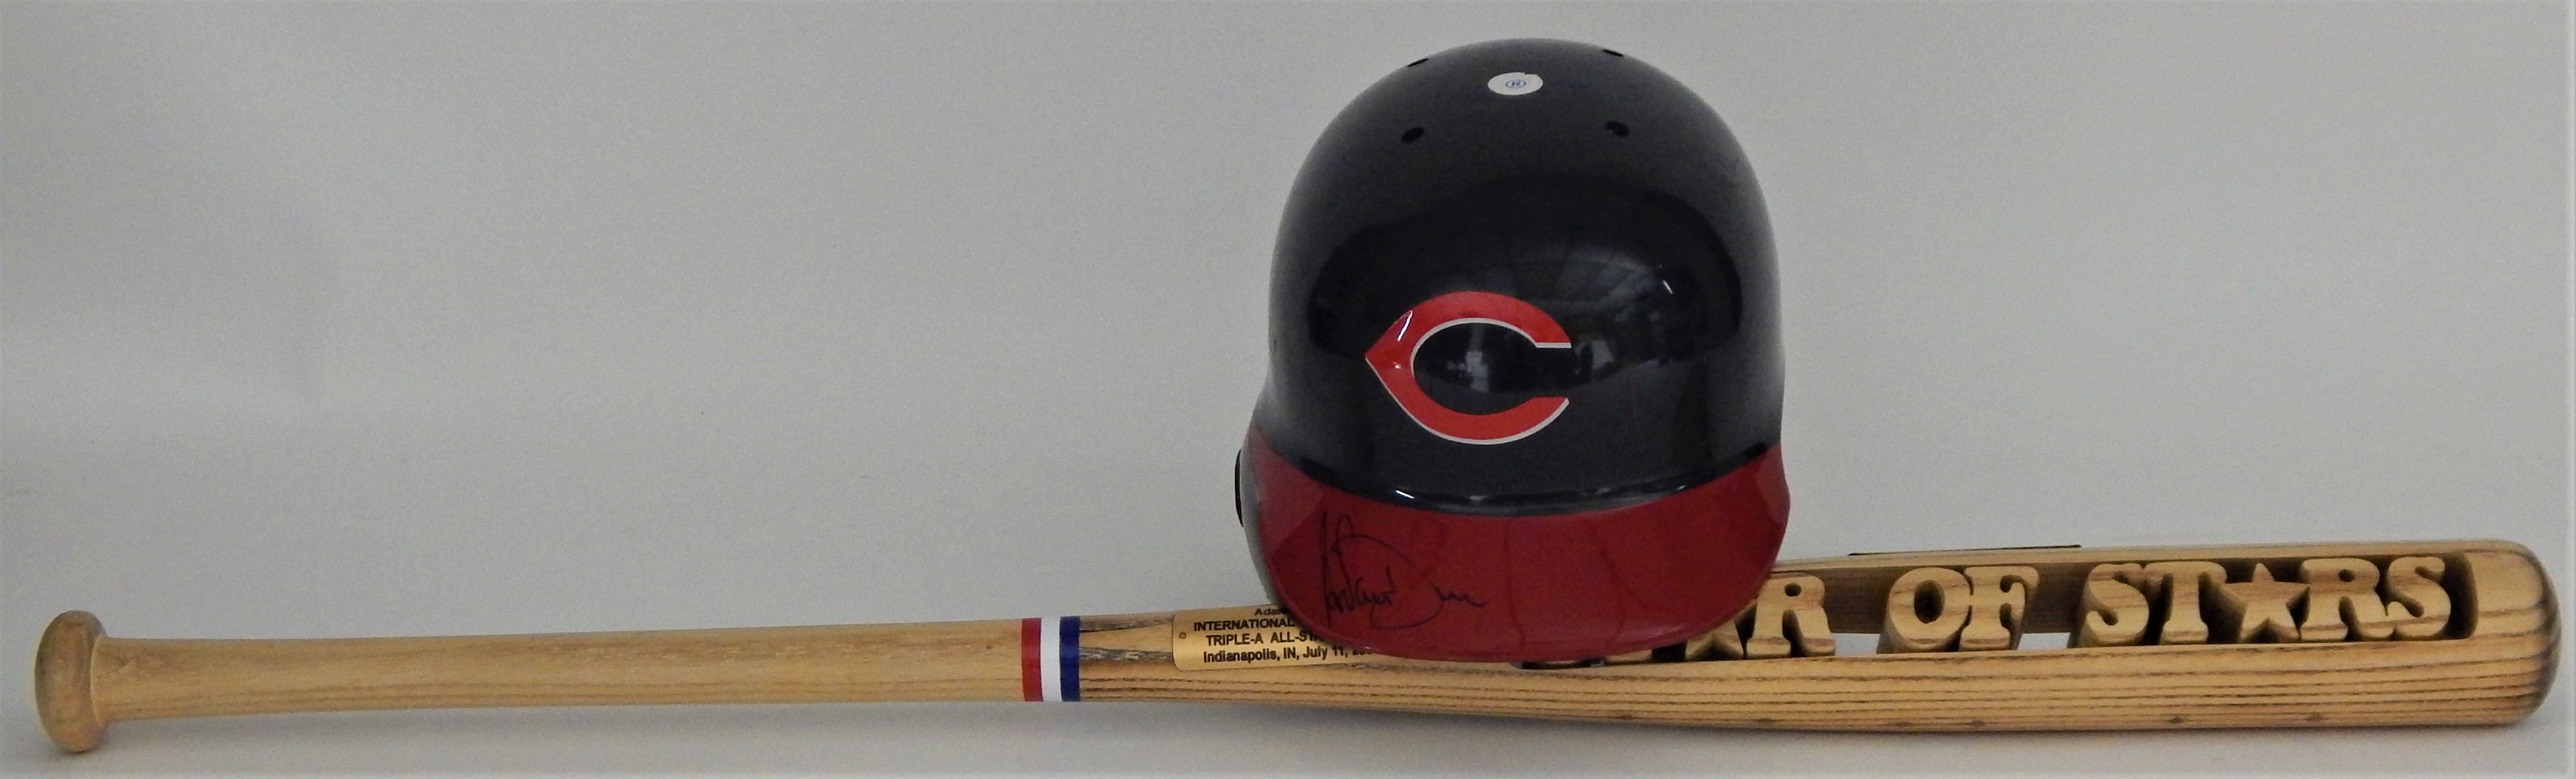 Bernie Stowe Cincinnati Reds Collection - Adam Dunn Minor League Award Bat and Signed Reds Helmet (Bernie Stowe Collection)